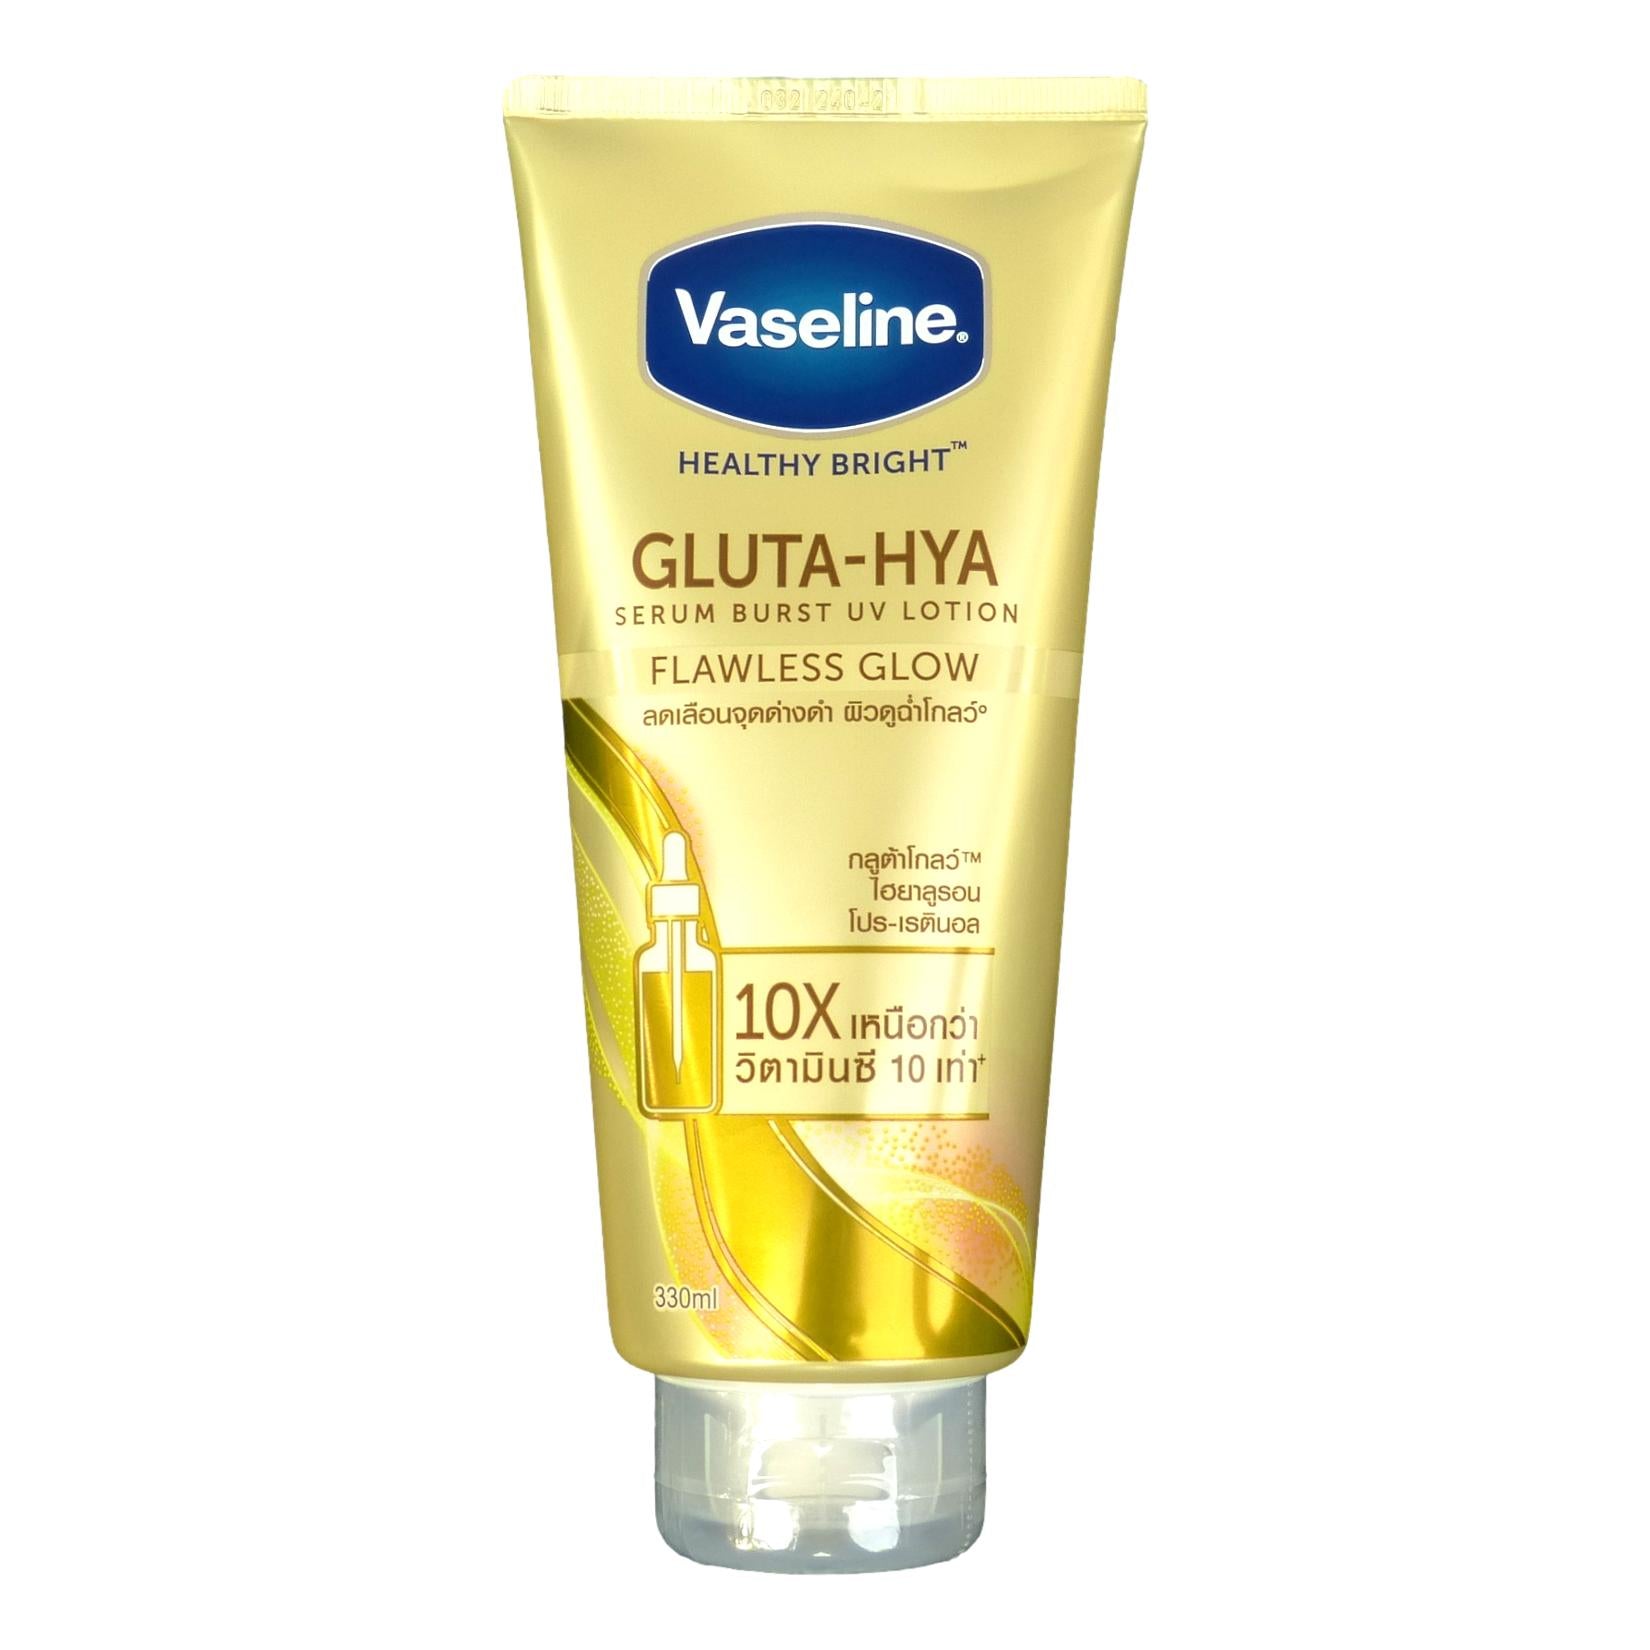 Vaseline Healthy Bright Gluta-Hya Serum Burst Lotion 70ml Vaseline Glu